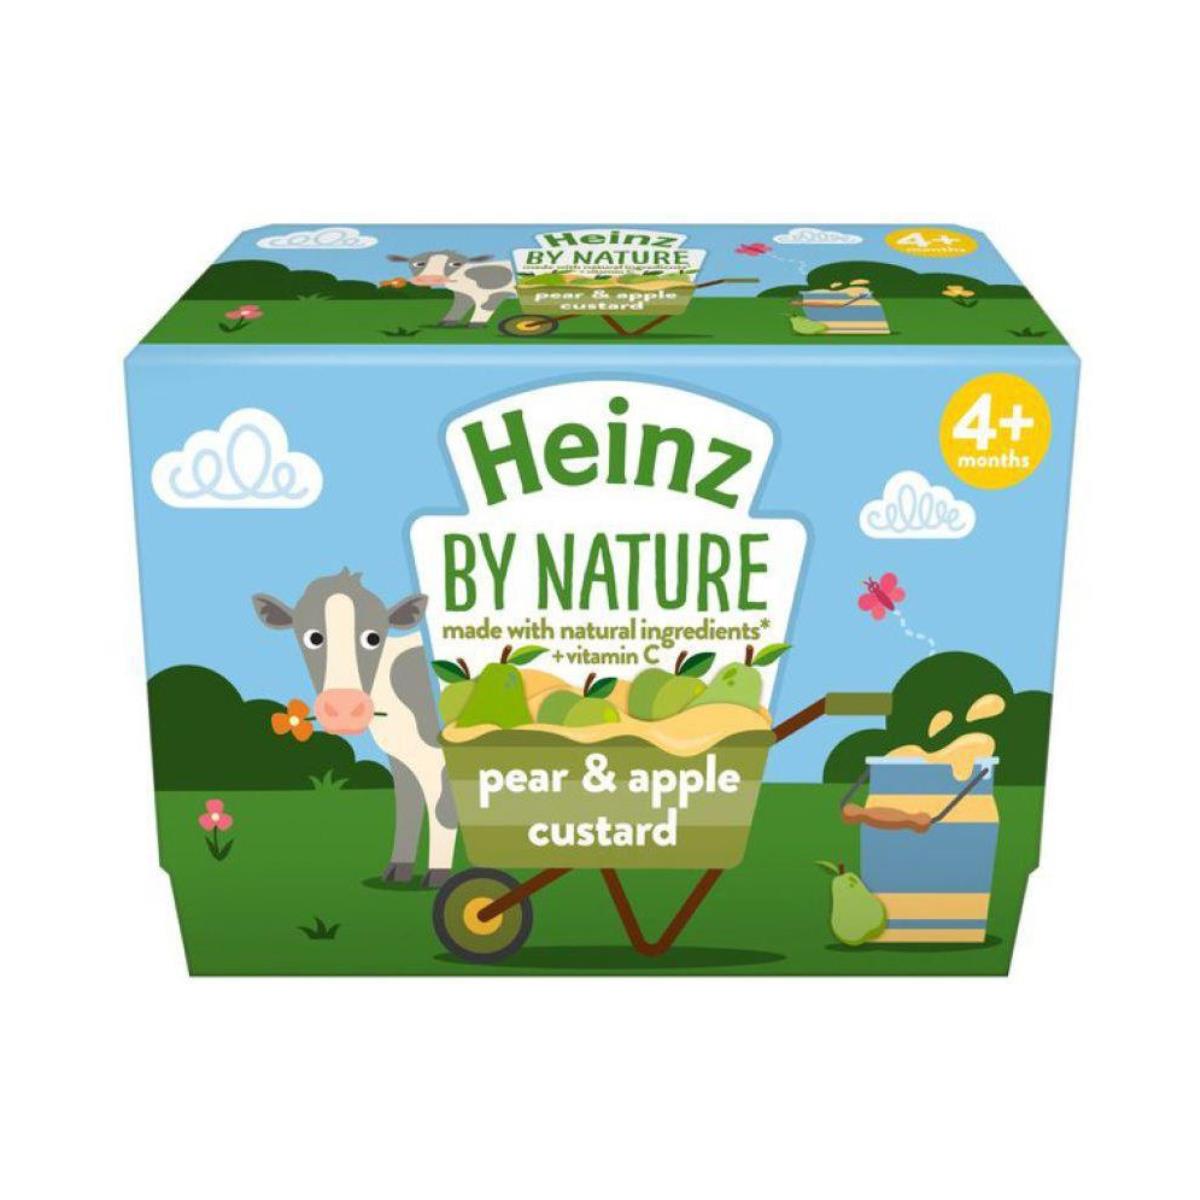 Heinz by Nature (4 pack) Pear & Apple Custard - 400g (4x100g)